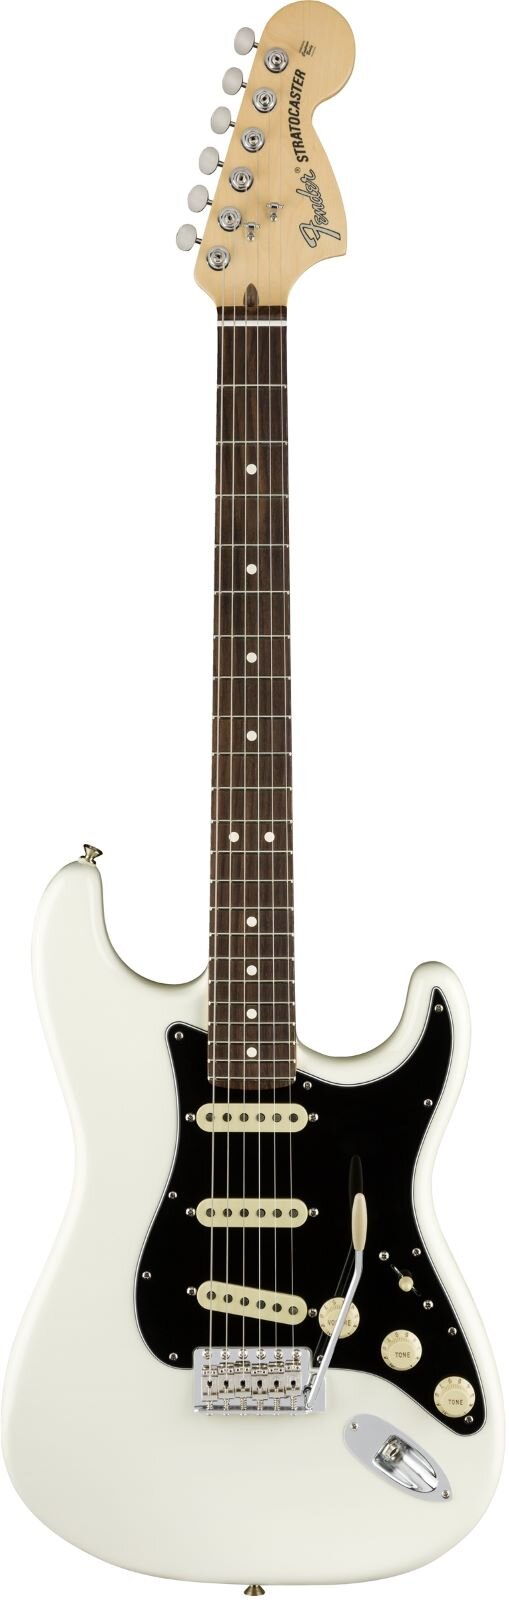 Fender American Performer Series Stratocaster Rosewood Griffbrett Arctic White : photo 1